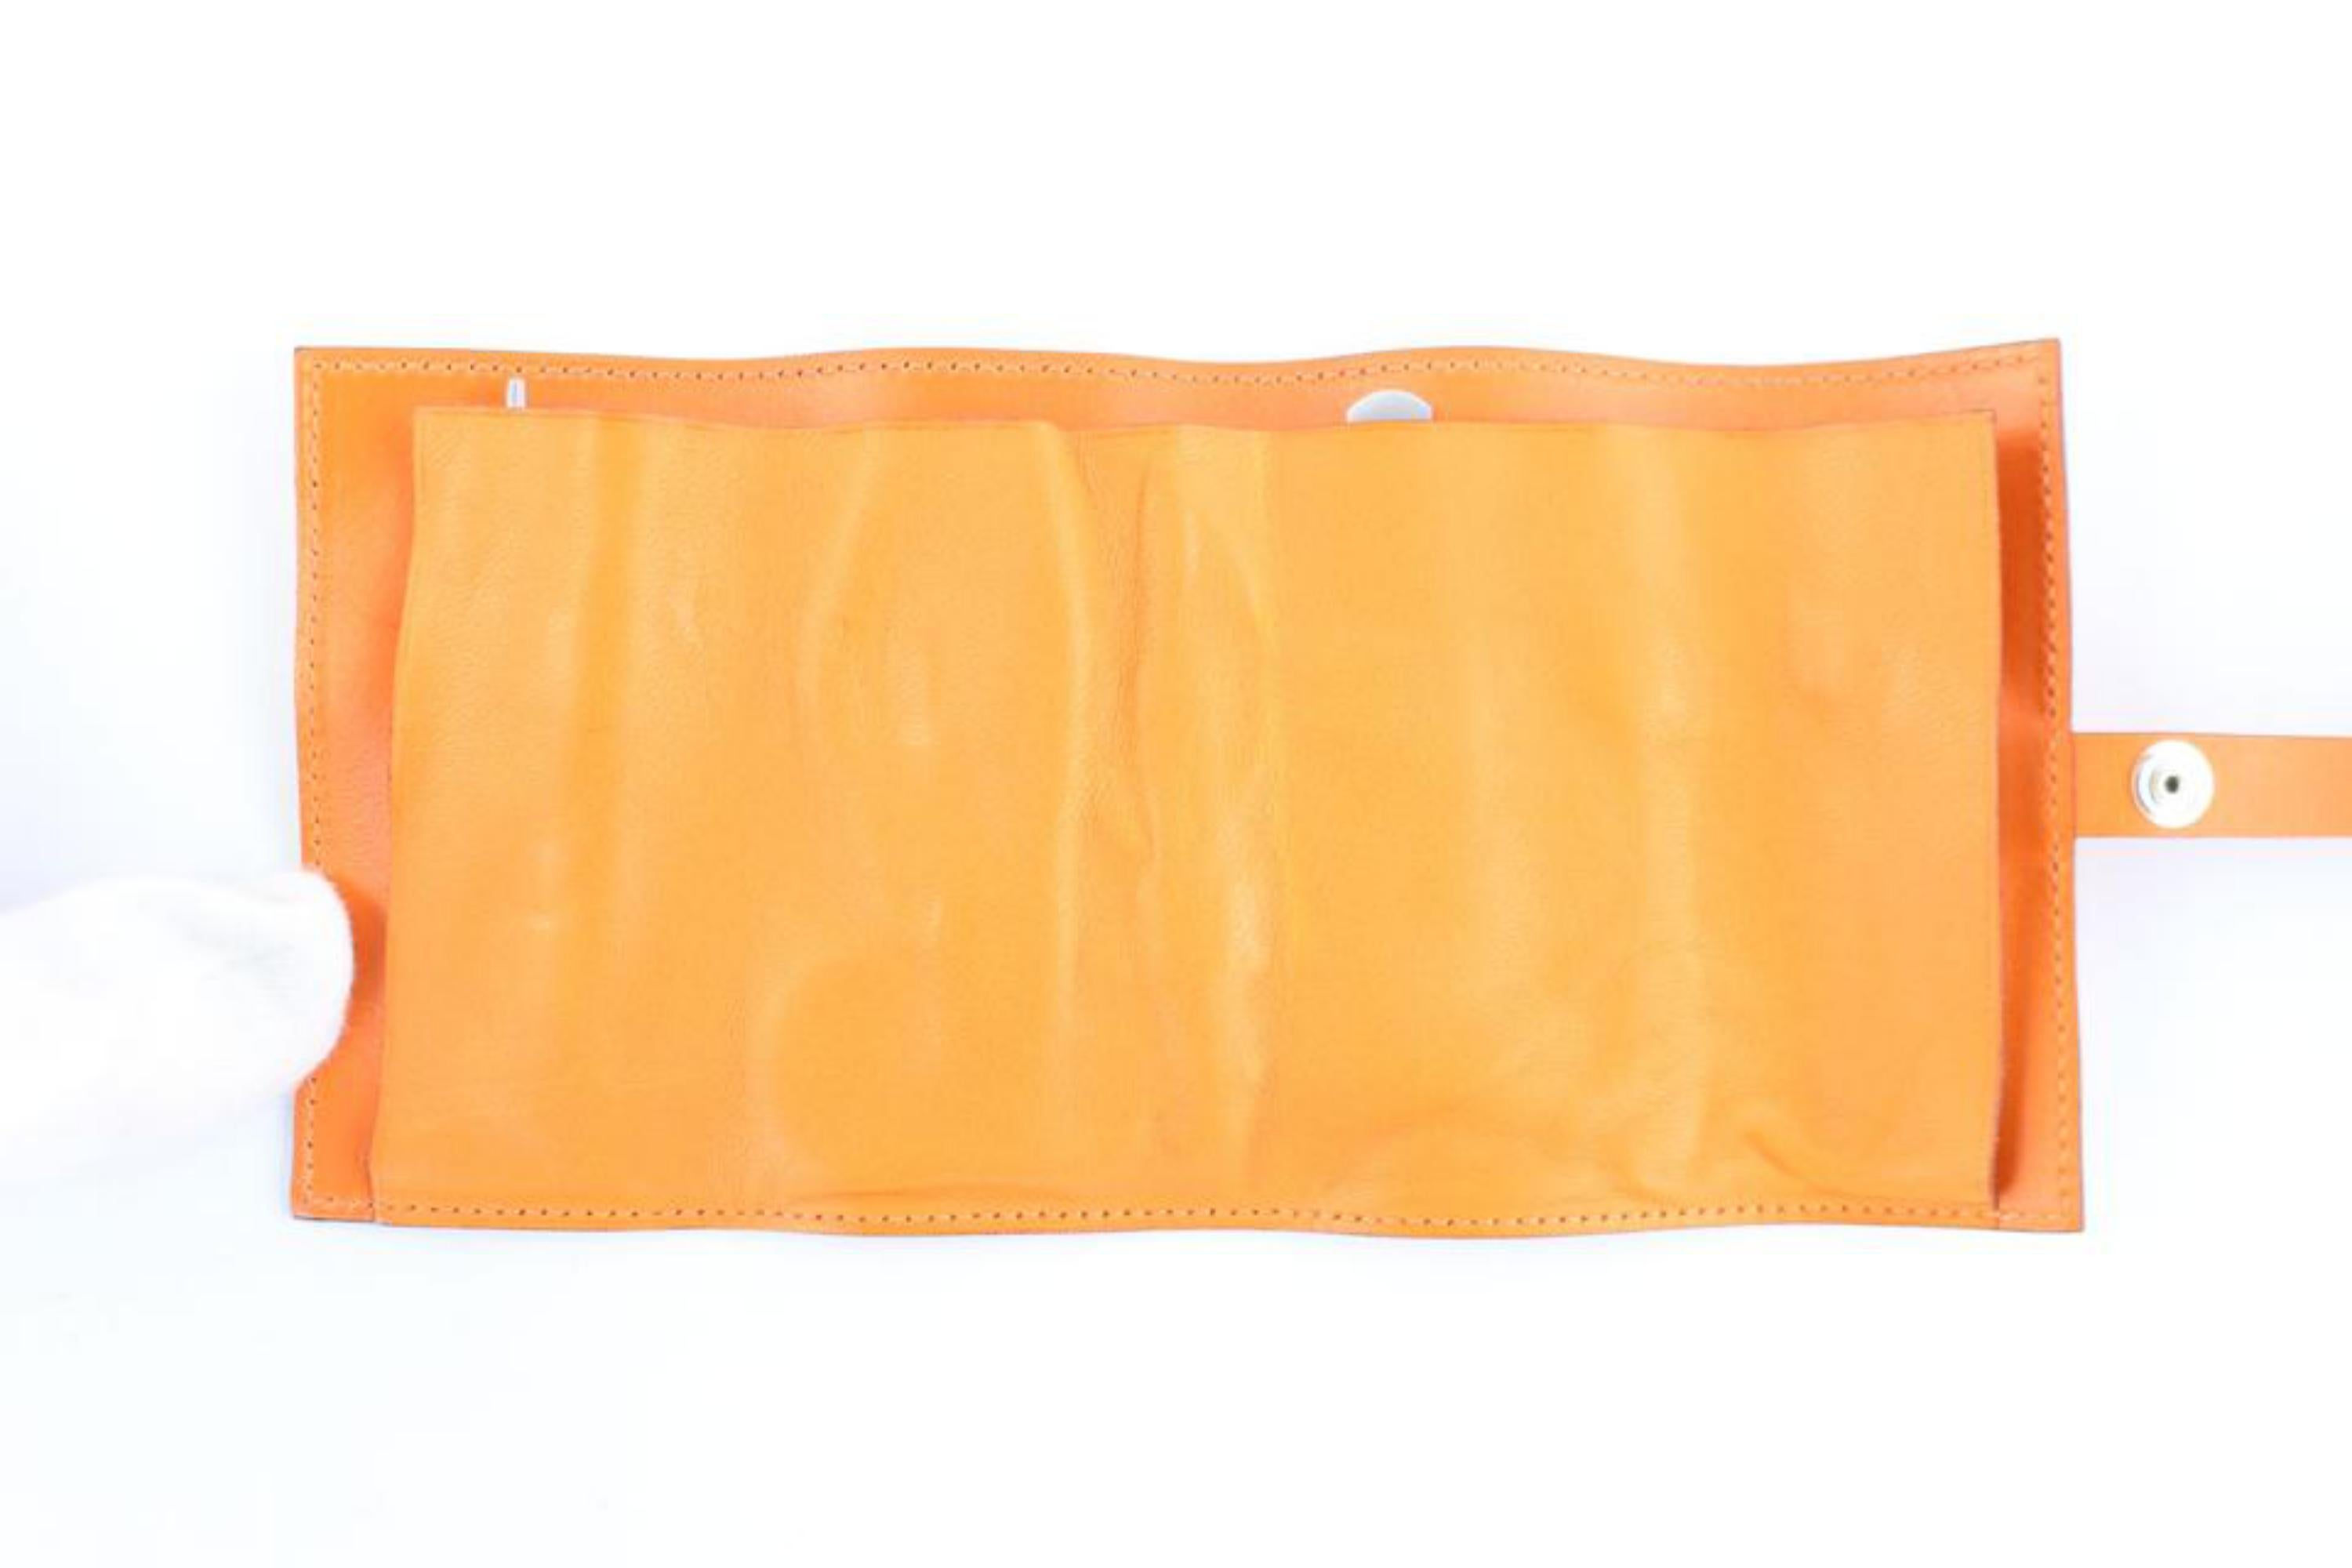 Hermès Nail Care Set 2hr1227 Orange Leather Clutch For Sale 5